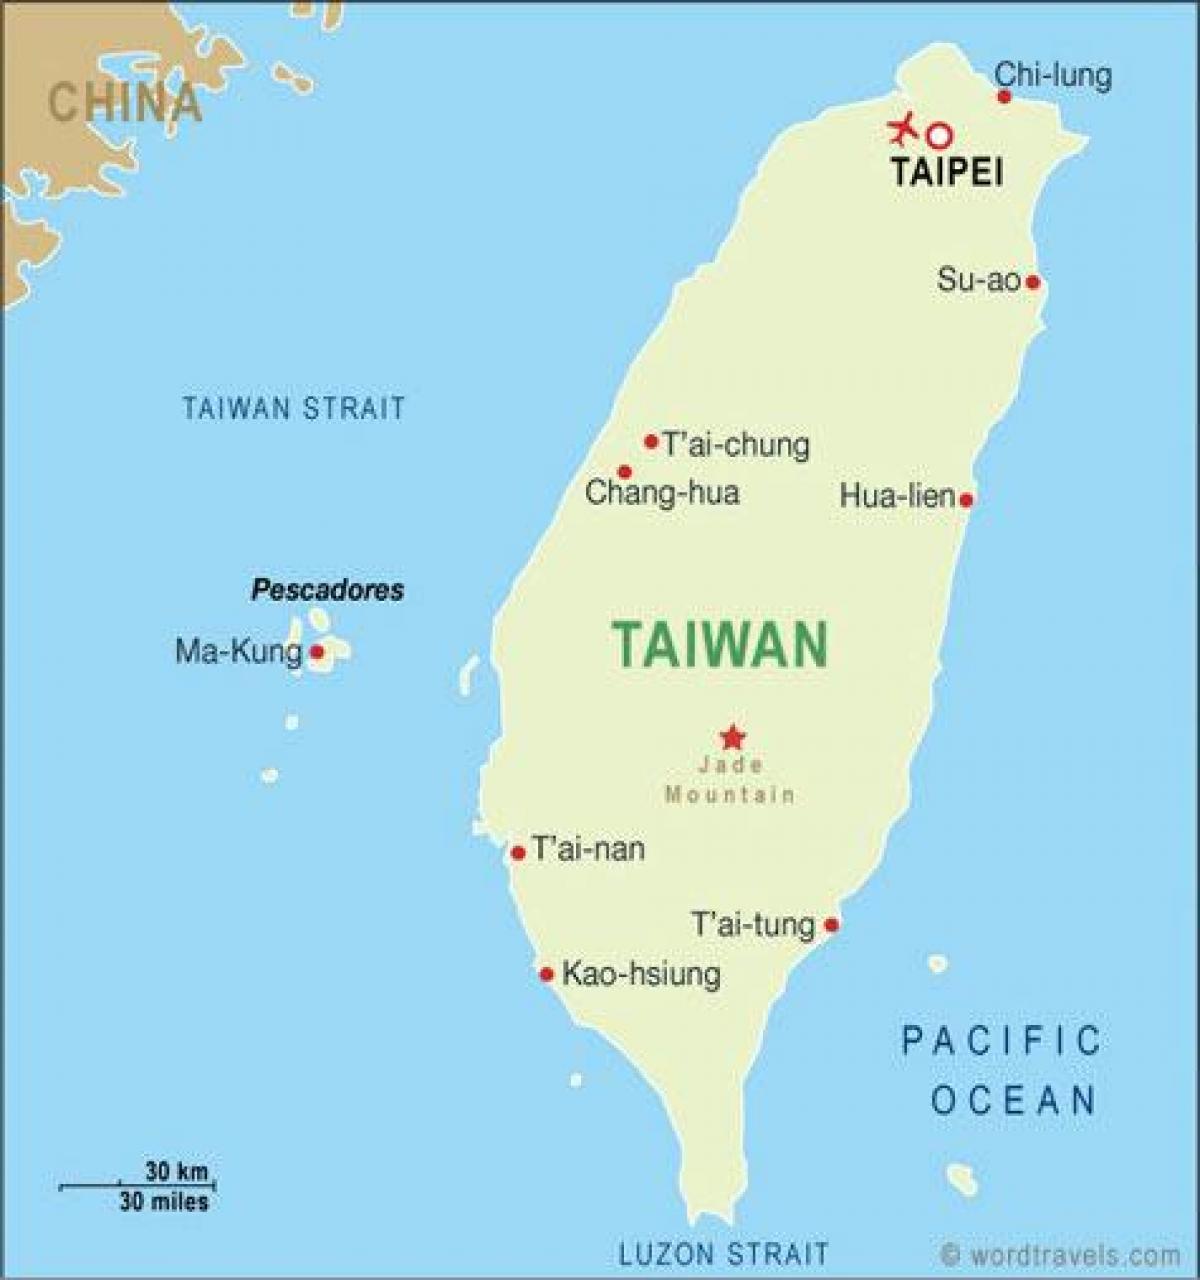 Taiwan taoyuan international airport sulla mappa